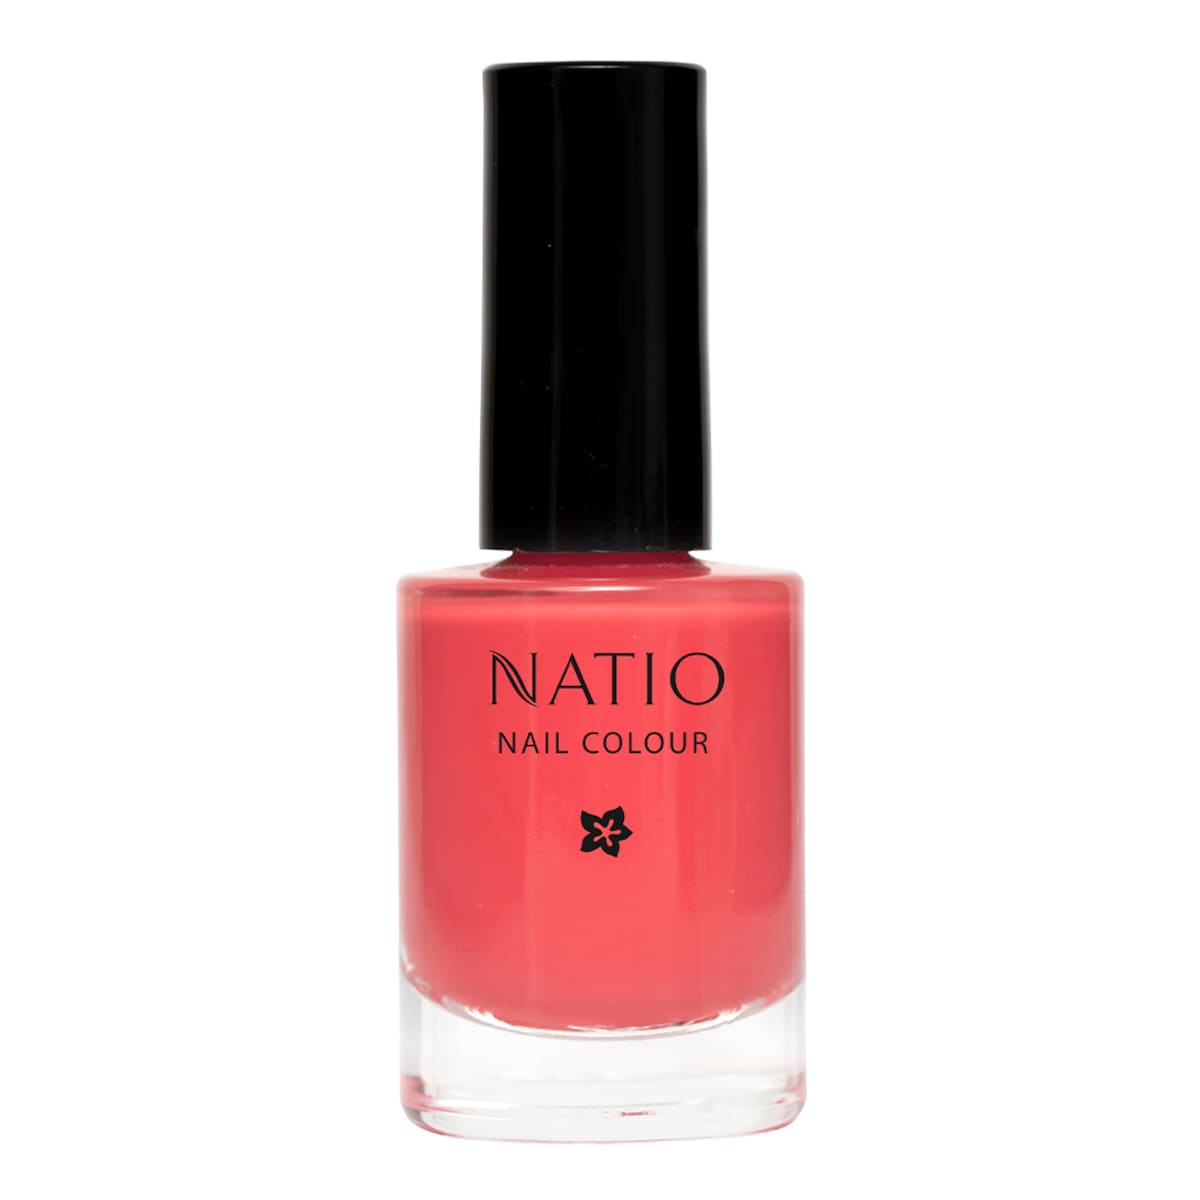 Natio Nail Colour Lovely 10ml (New)